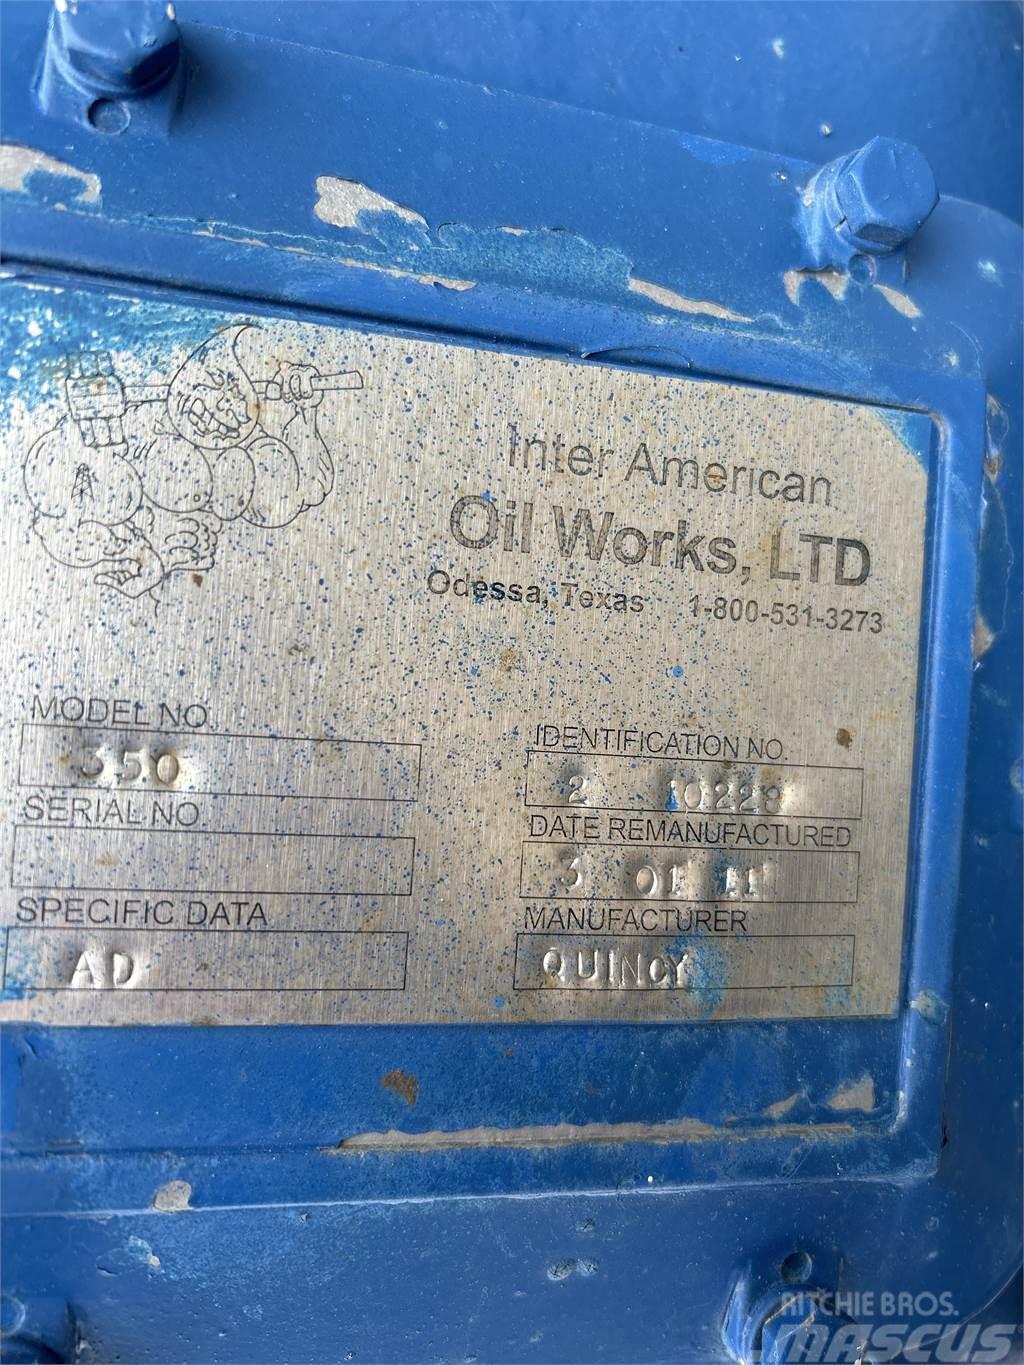  Oil works 350 Compressor Gas-Kompressionsausrüstung